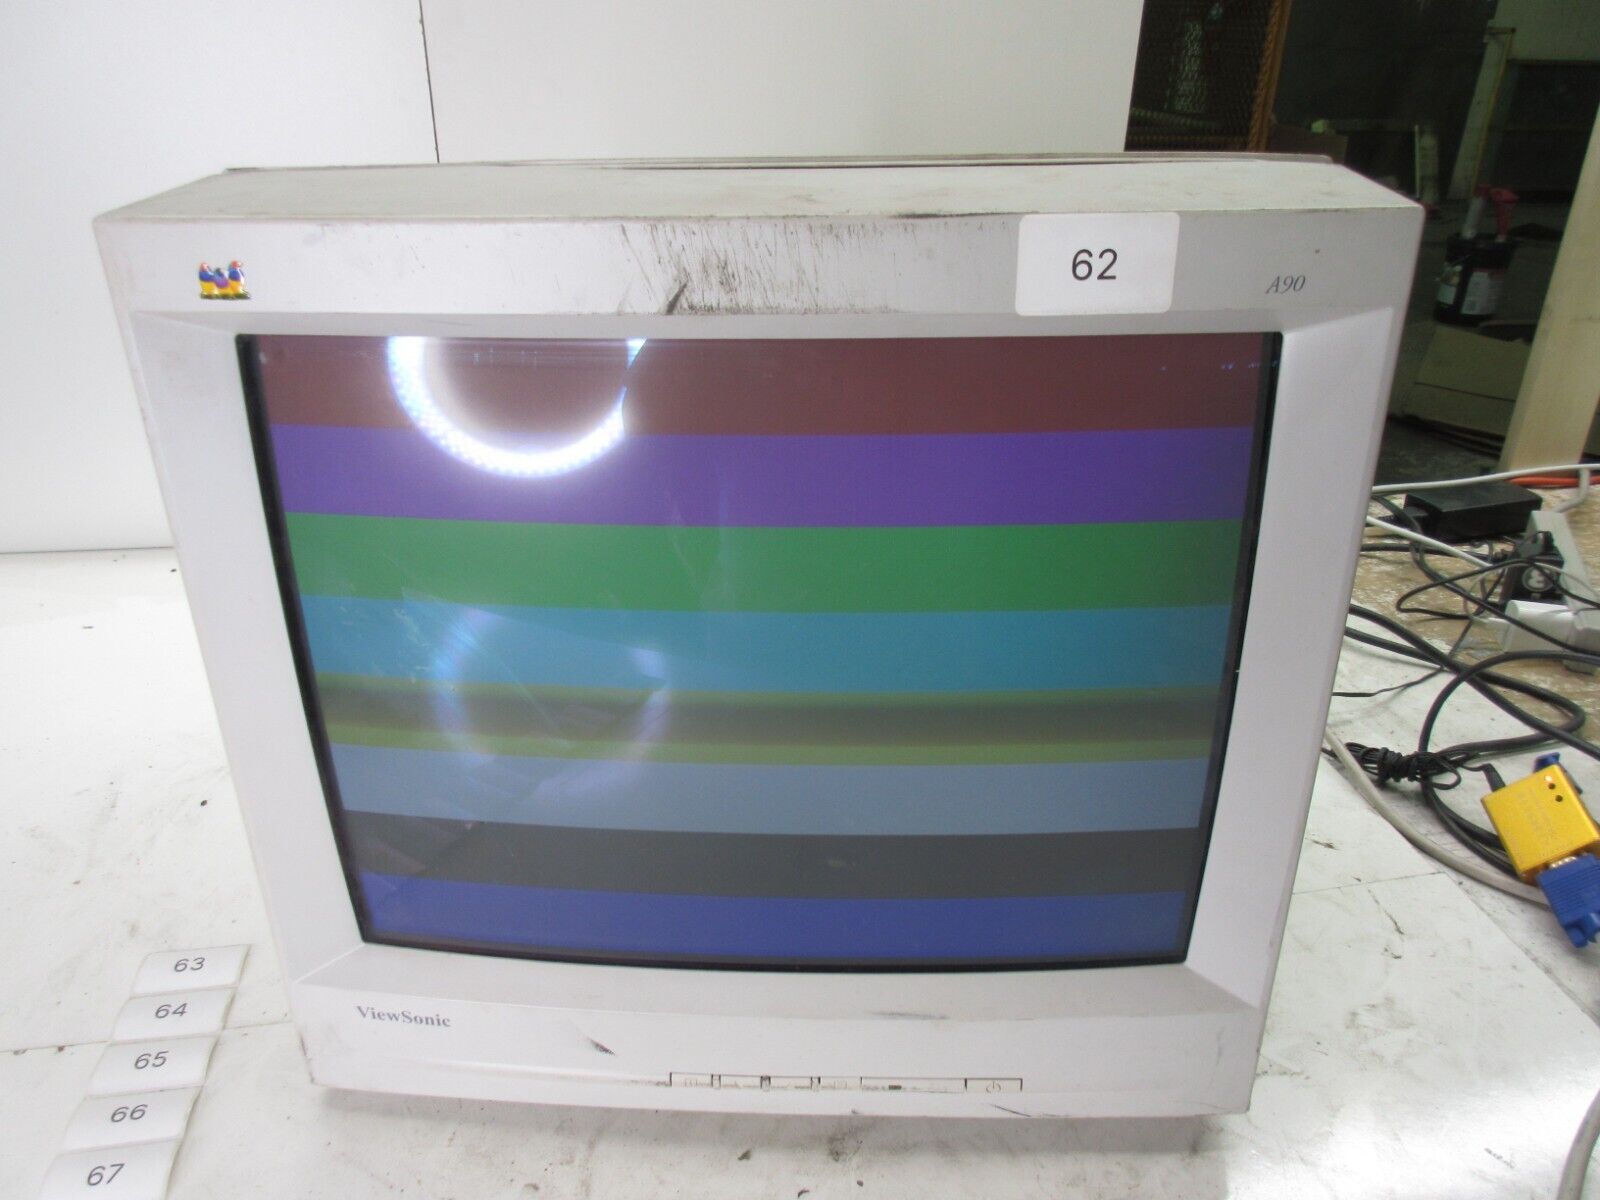 ViewSonic A90 VCDTS21755-2R 19” CRT Monitor Vintage Retro CRT Monitor - READ